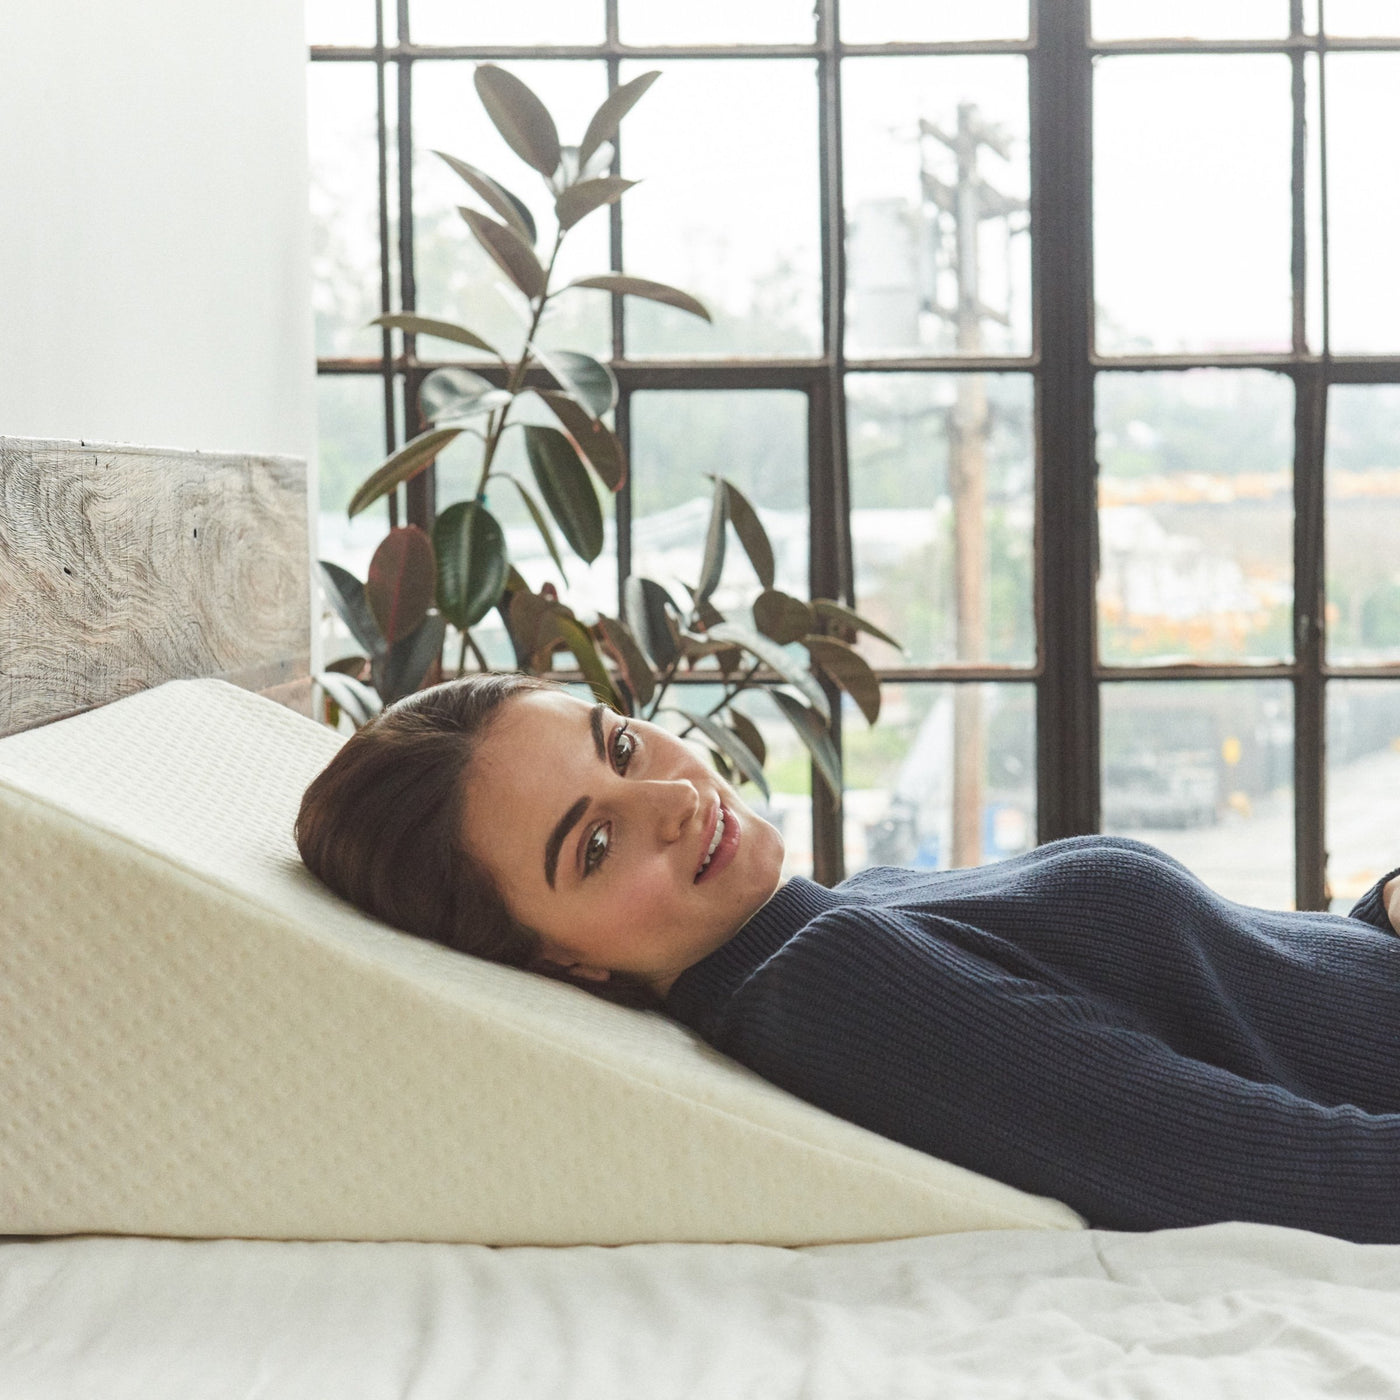 Lumbar Support Wedge Pillow Adjustable Sleep Bed Cushion Lower